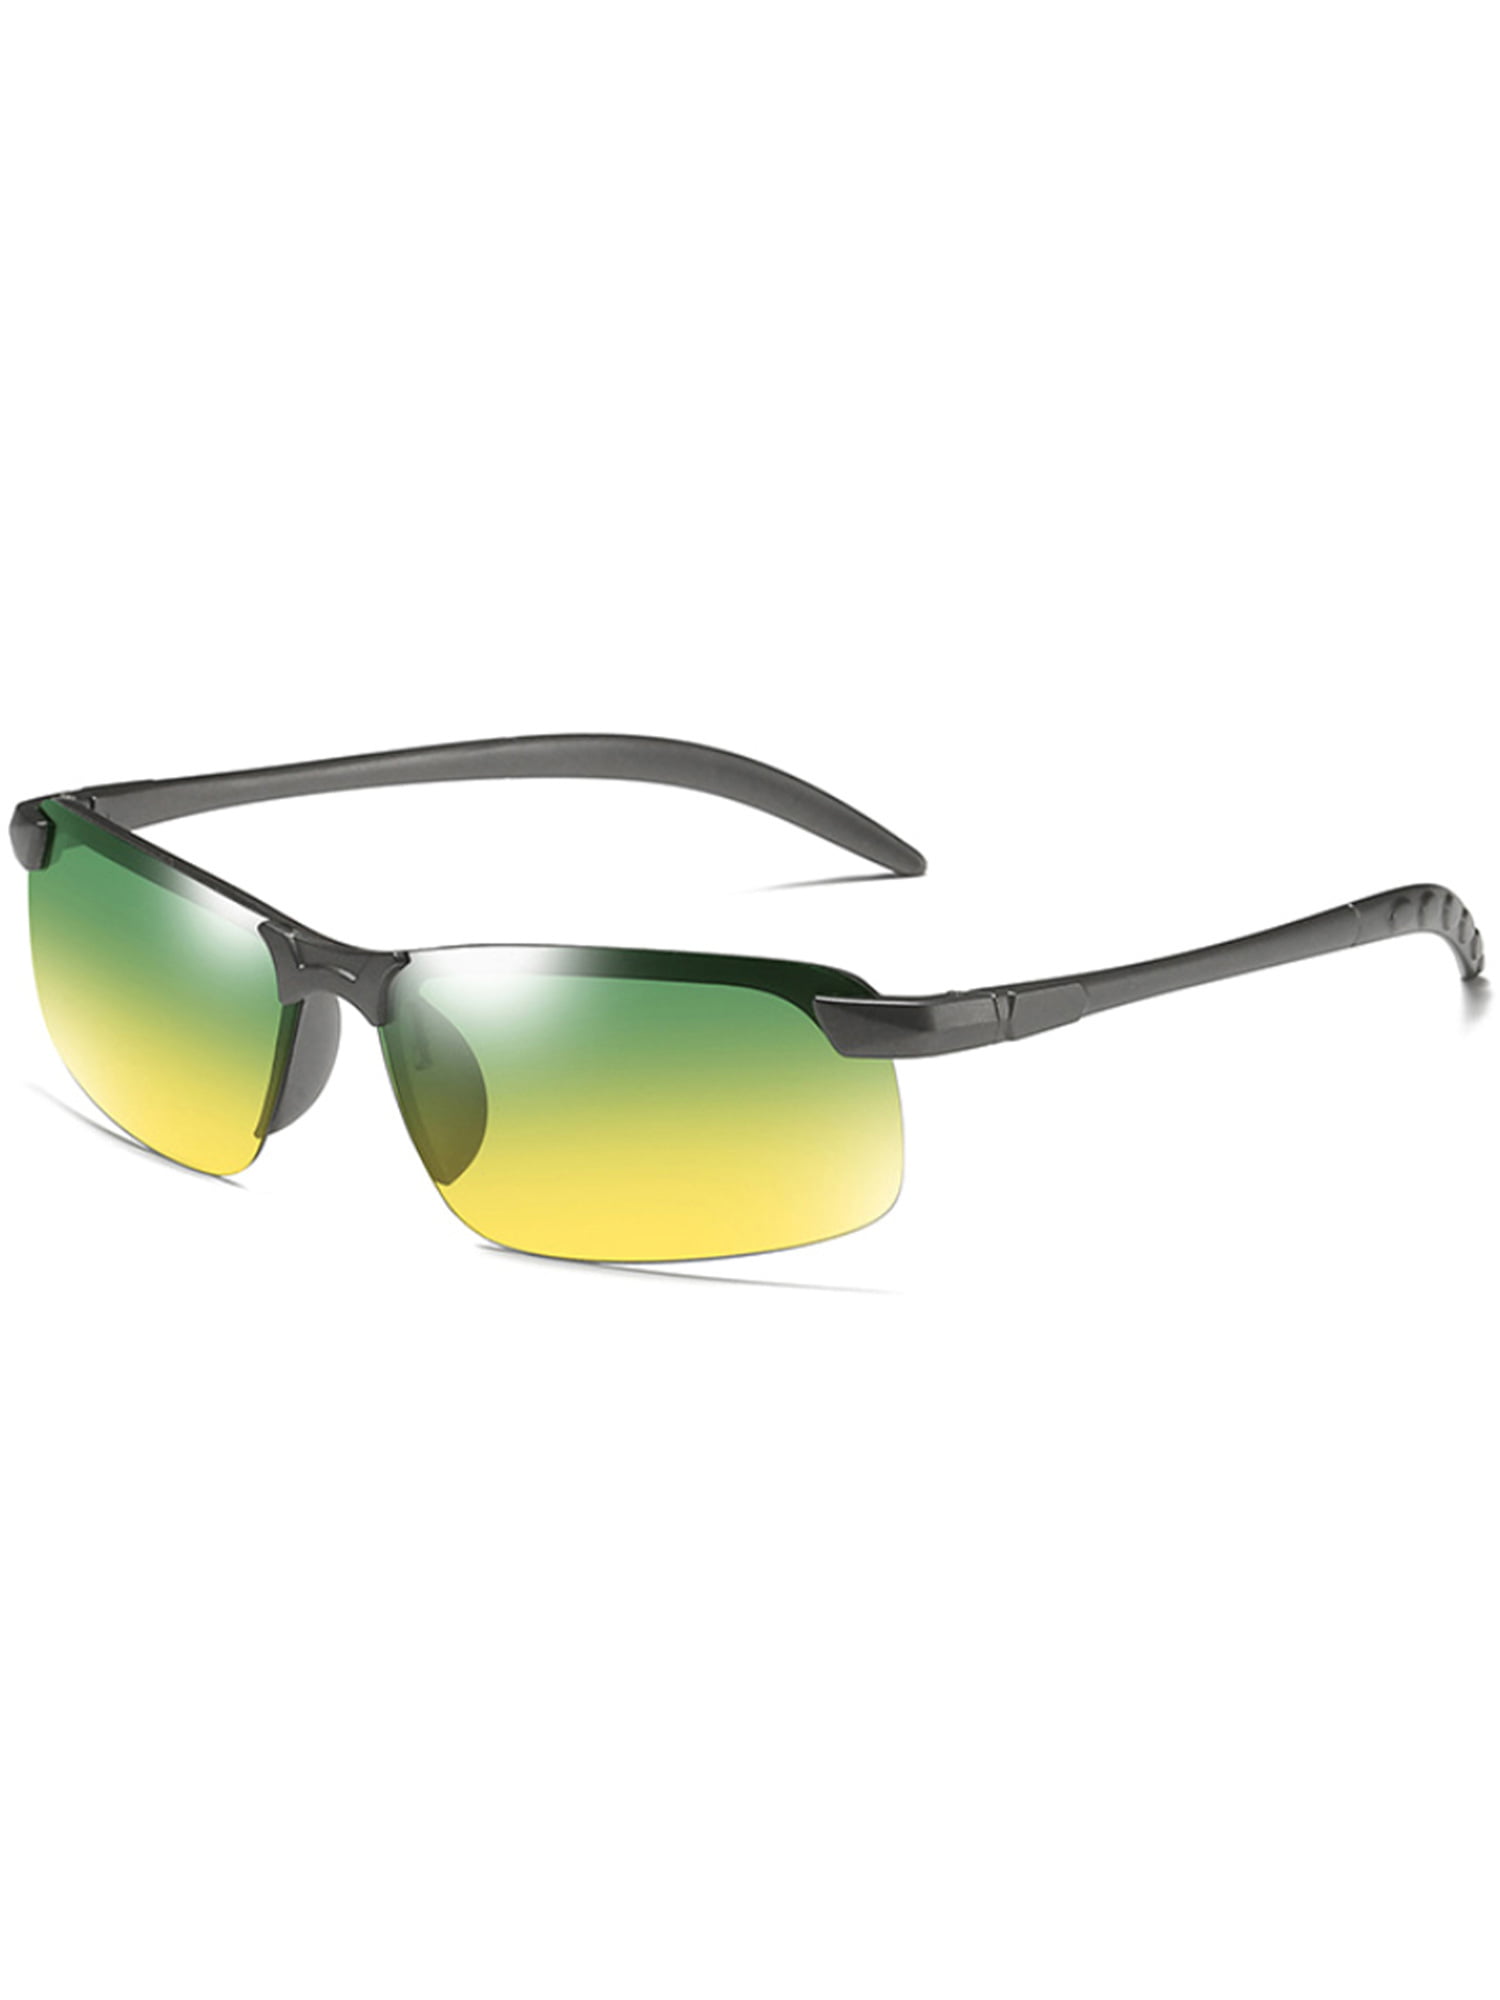 Men Photochromic Polarized Sunglasses Day and Night UV400 Driving Sports Glasses 